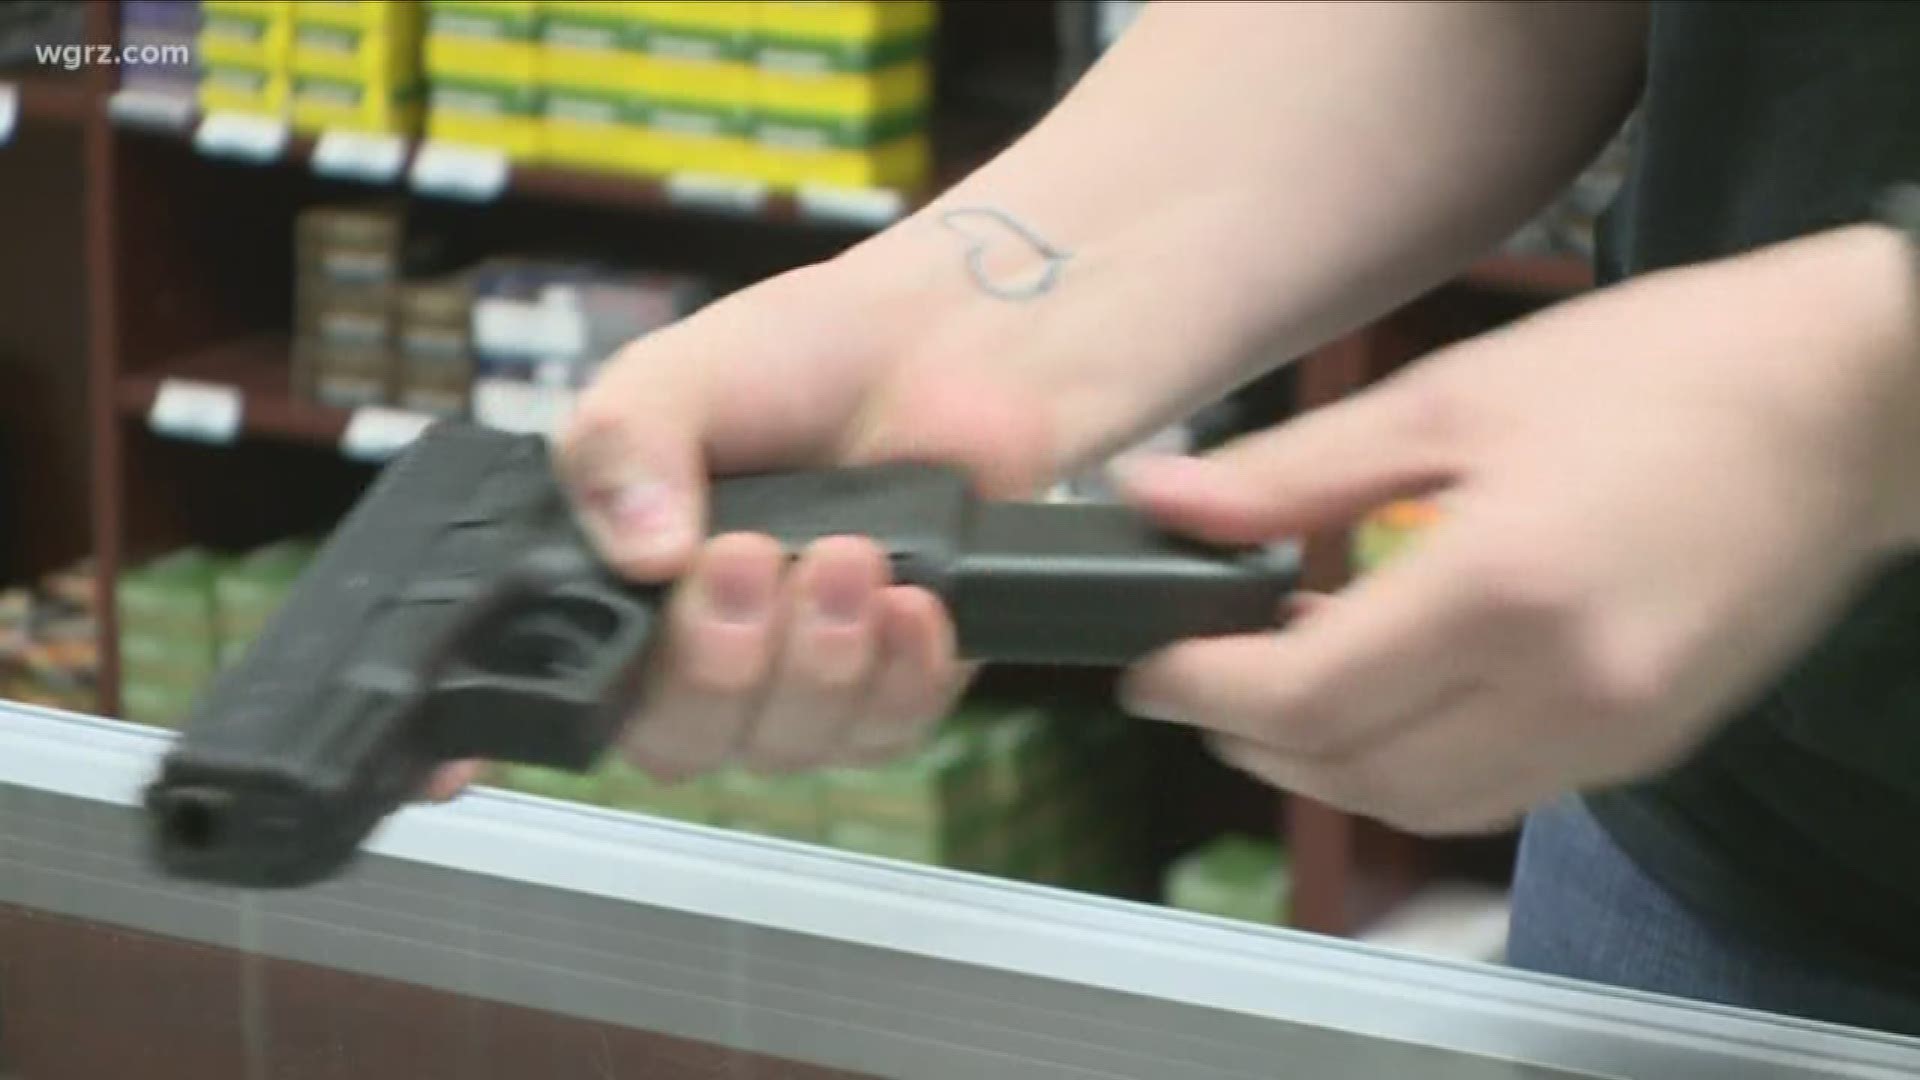 Gun rights debate takes place in West Seneca